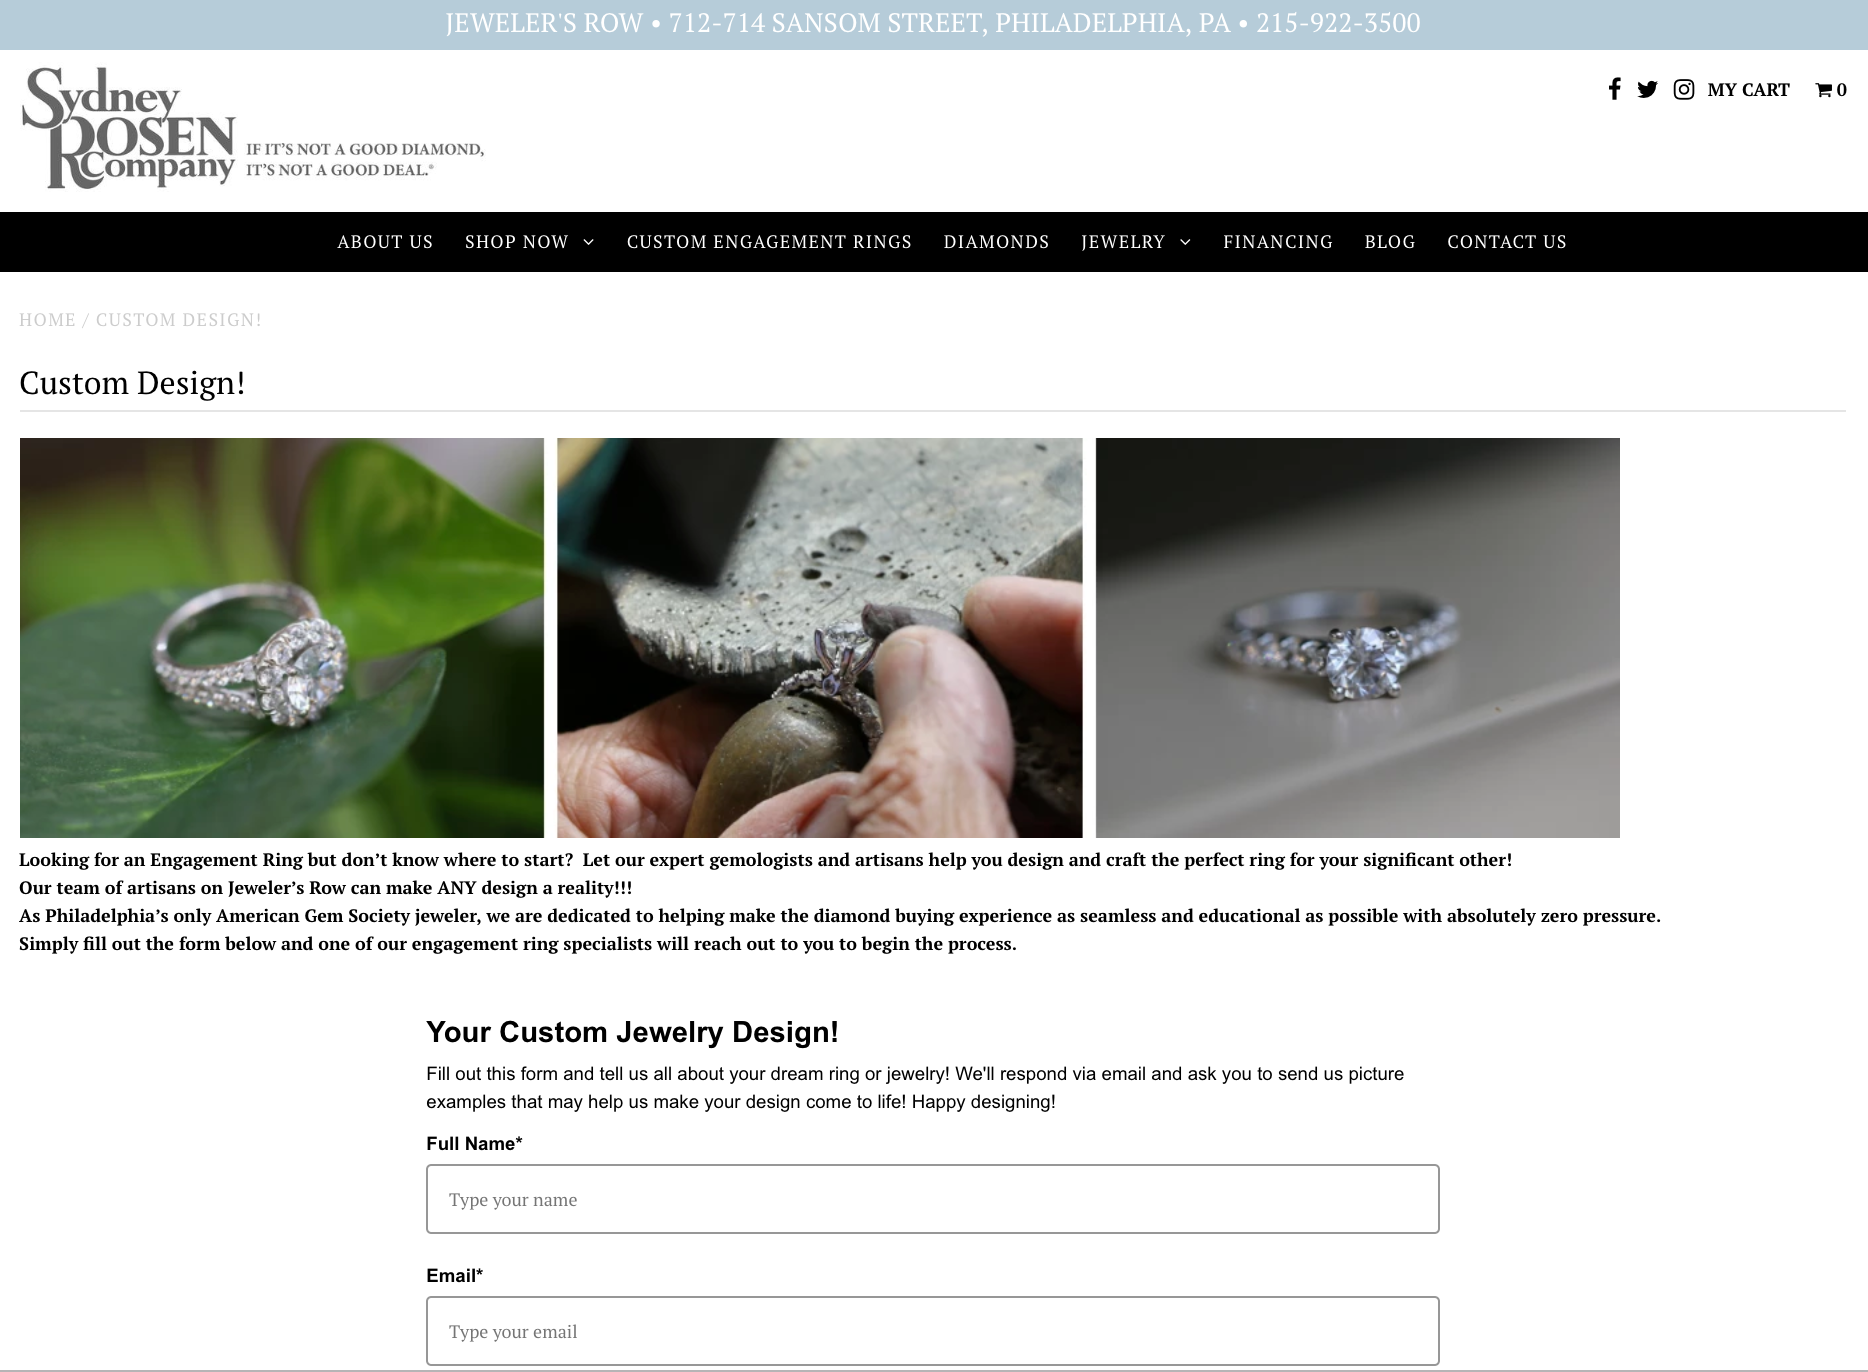 Custom Jewelry Design at Sydney Rosen